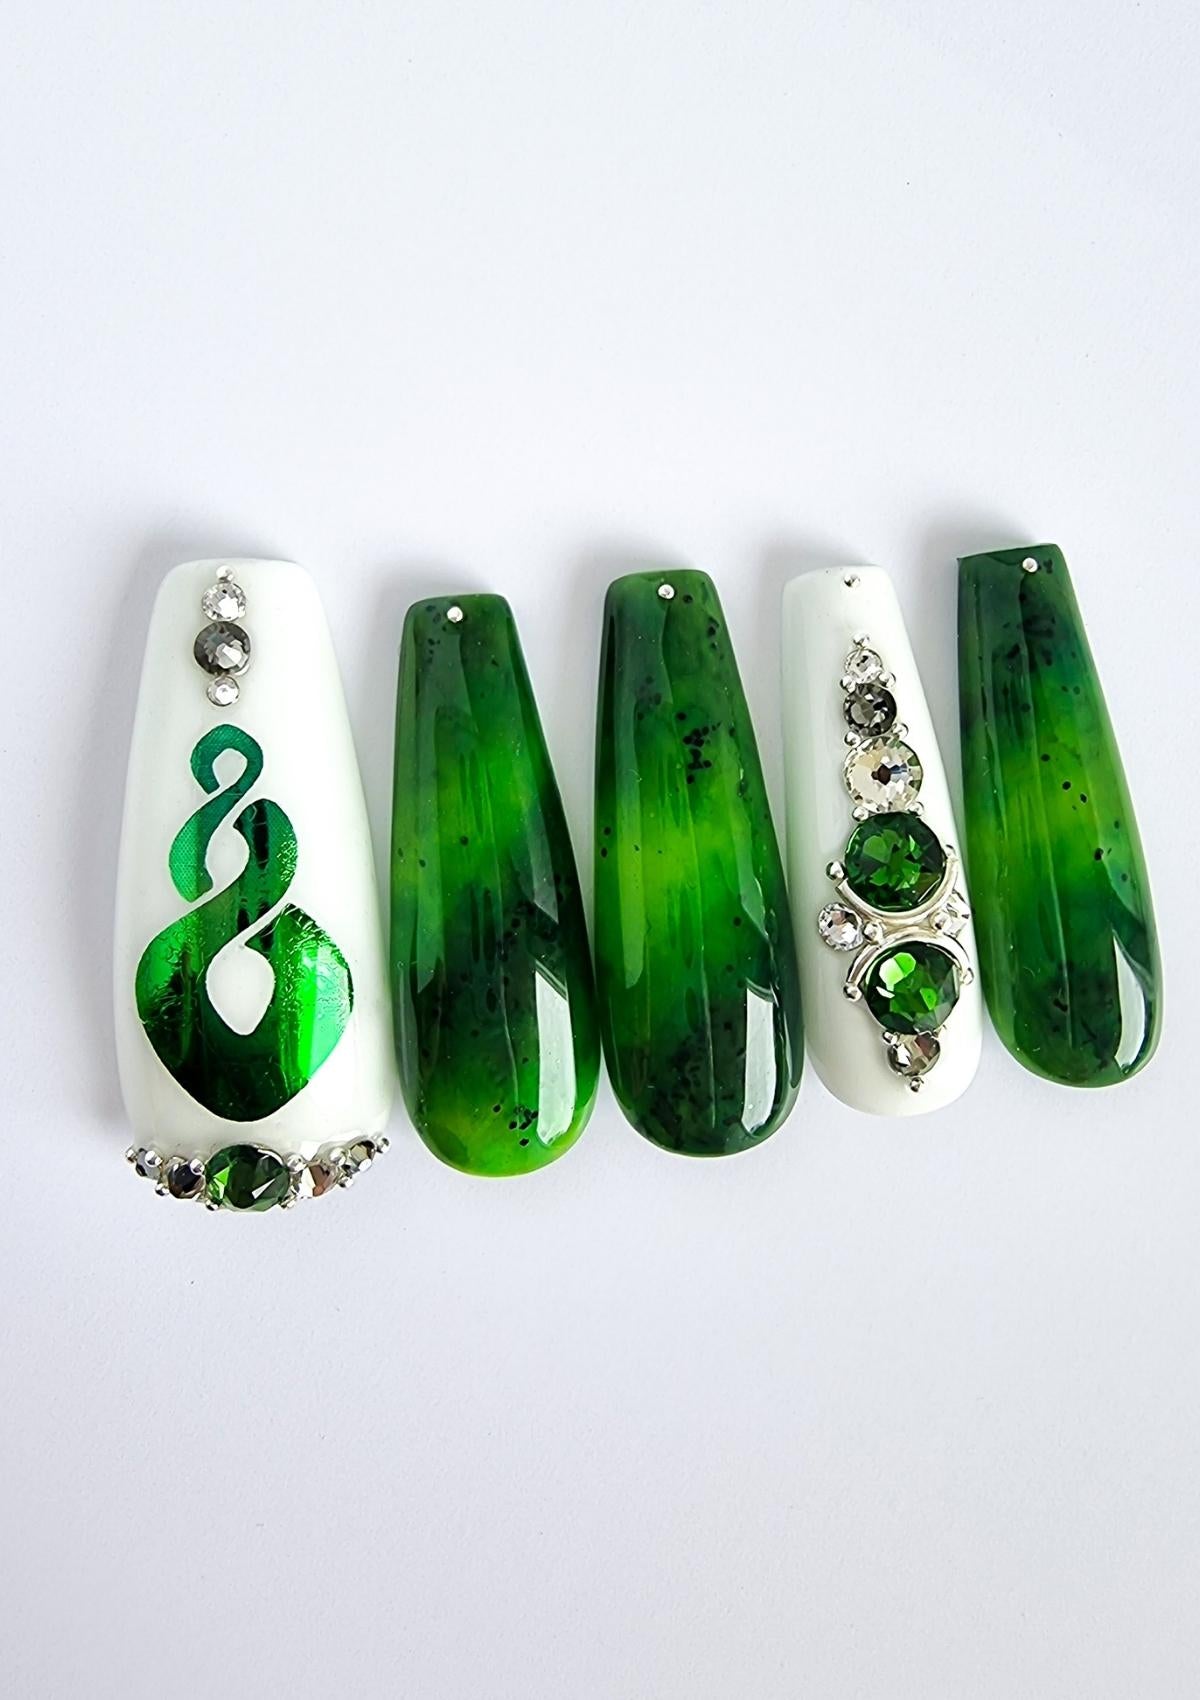 White and pounamu greenstone press-on nails  with matching Swarovski crystals and green Maori Nail Foils  